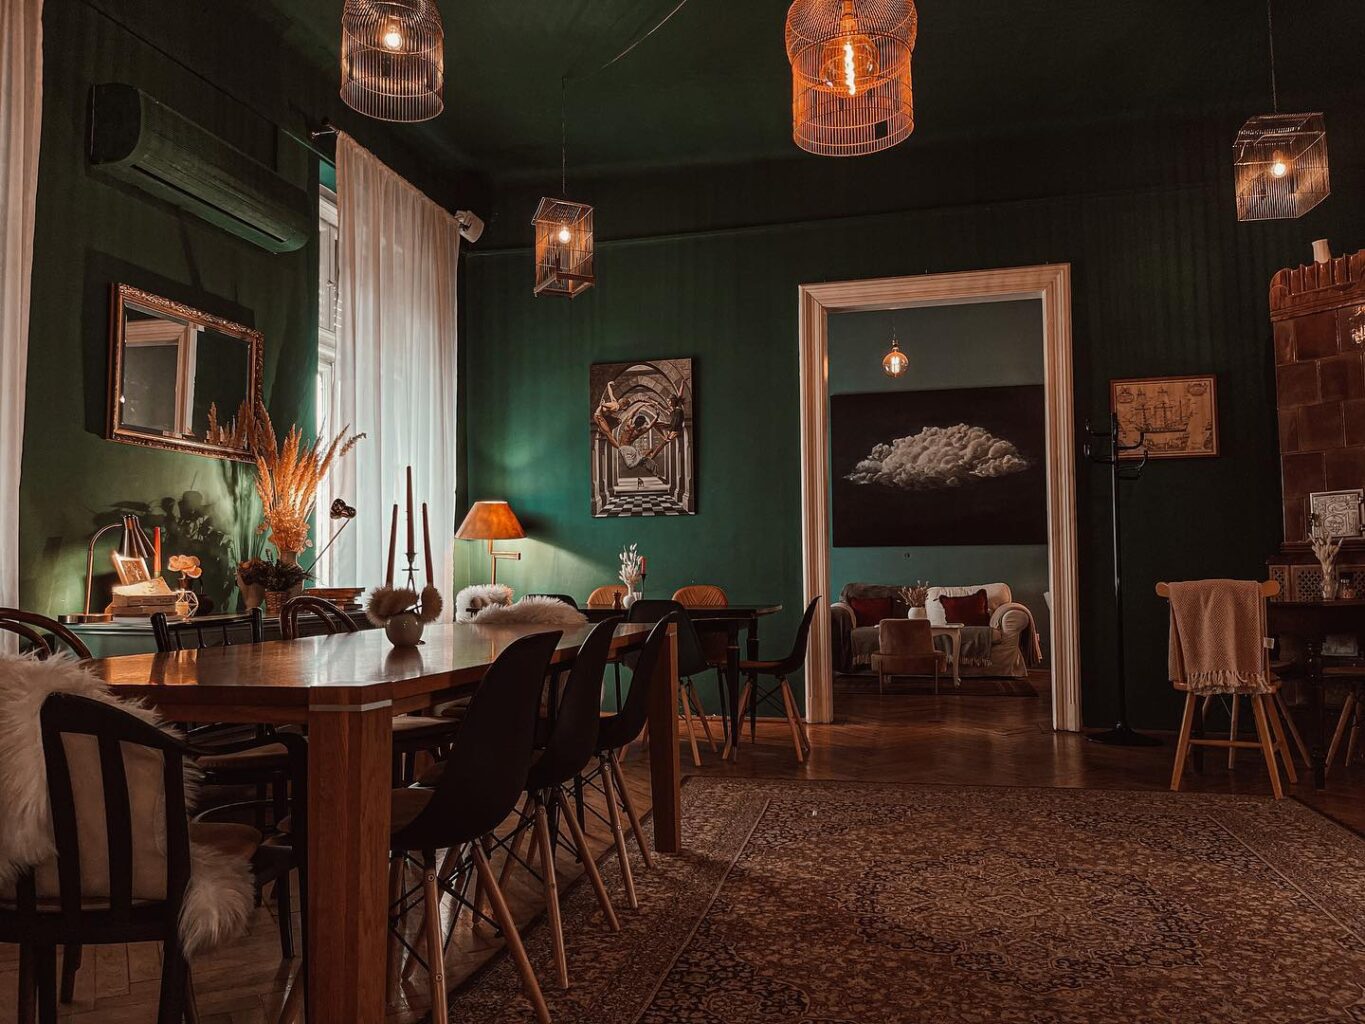 incapere la restaurant Handmade, cu pereti vopsiti verde inchis, mobilier clasic, elegant si atmosfera intima, unul din cele mai bune restaurante Timișoara